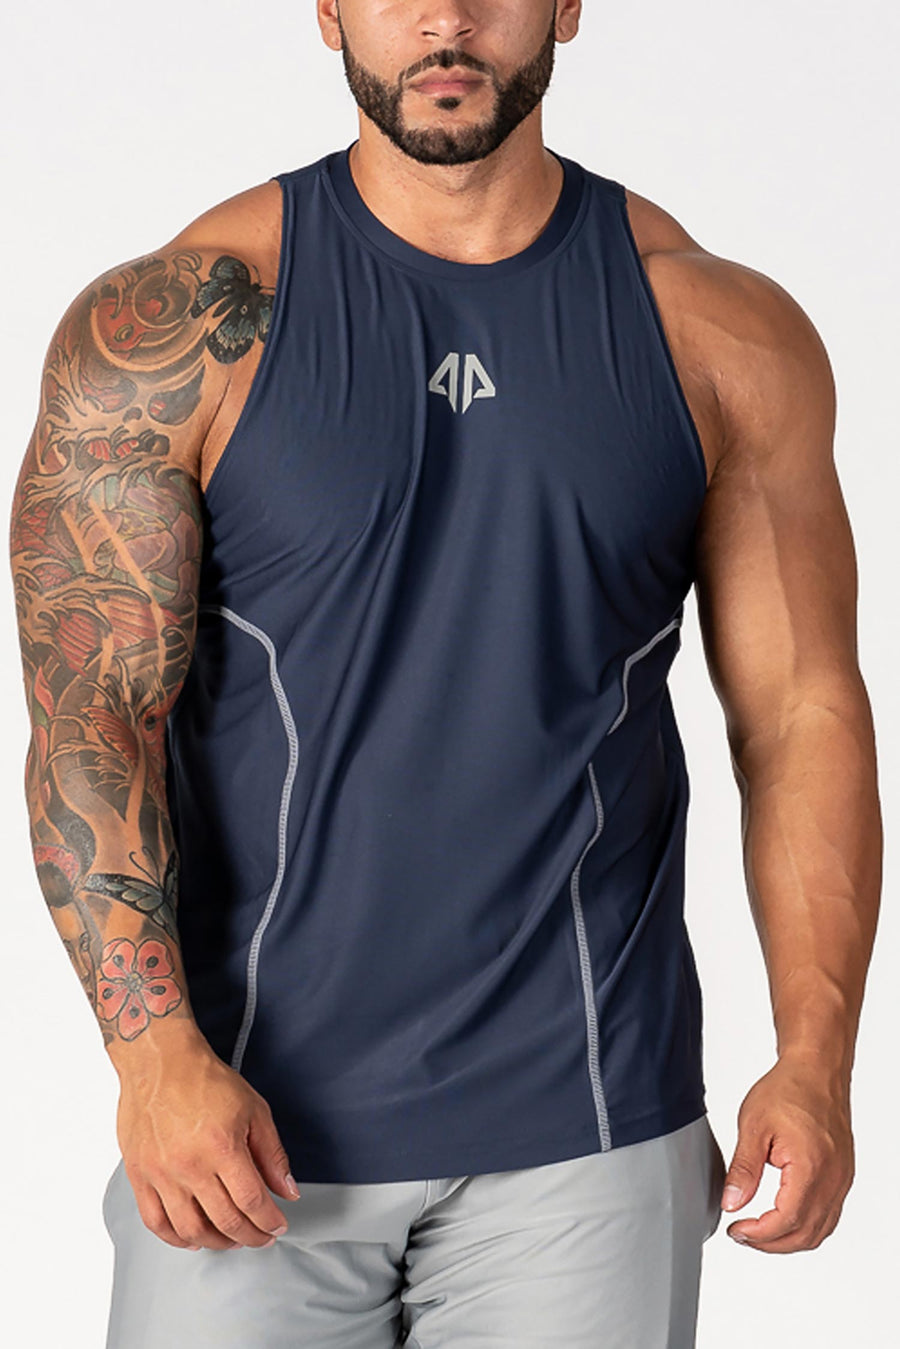 Alpha Prime Apparel- Performance Wear Designed for the Modern Athlete